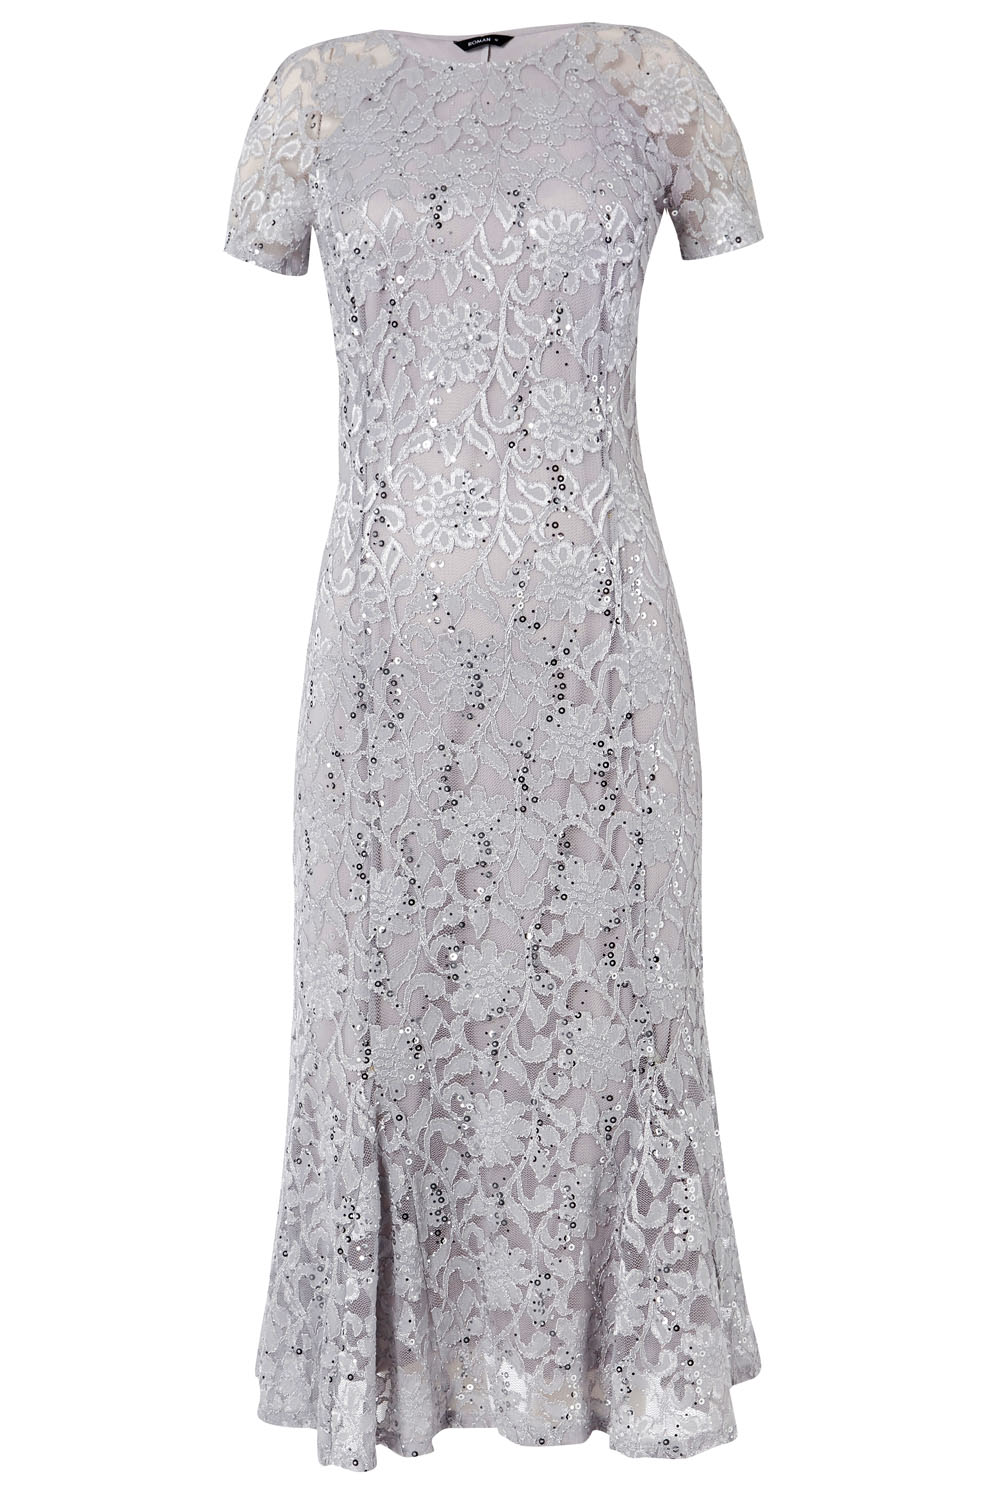 Silver Metallic Lace Sequin Midi Dress, Image 4 of 4